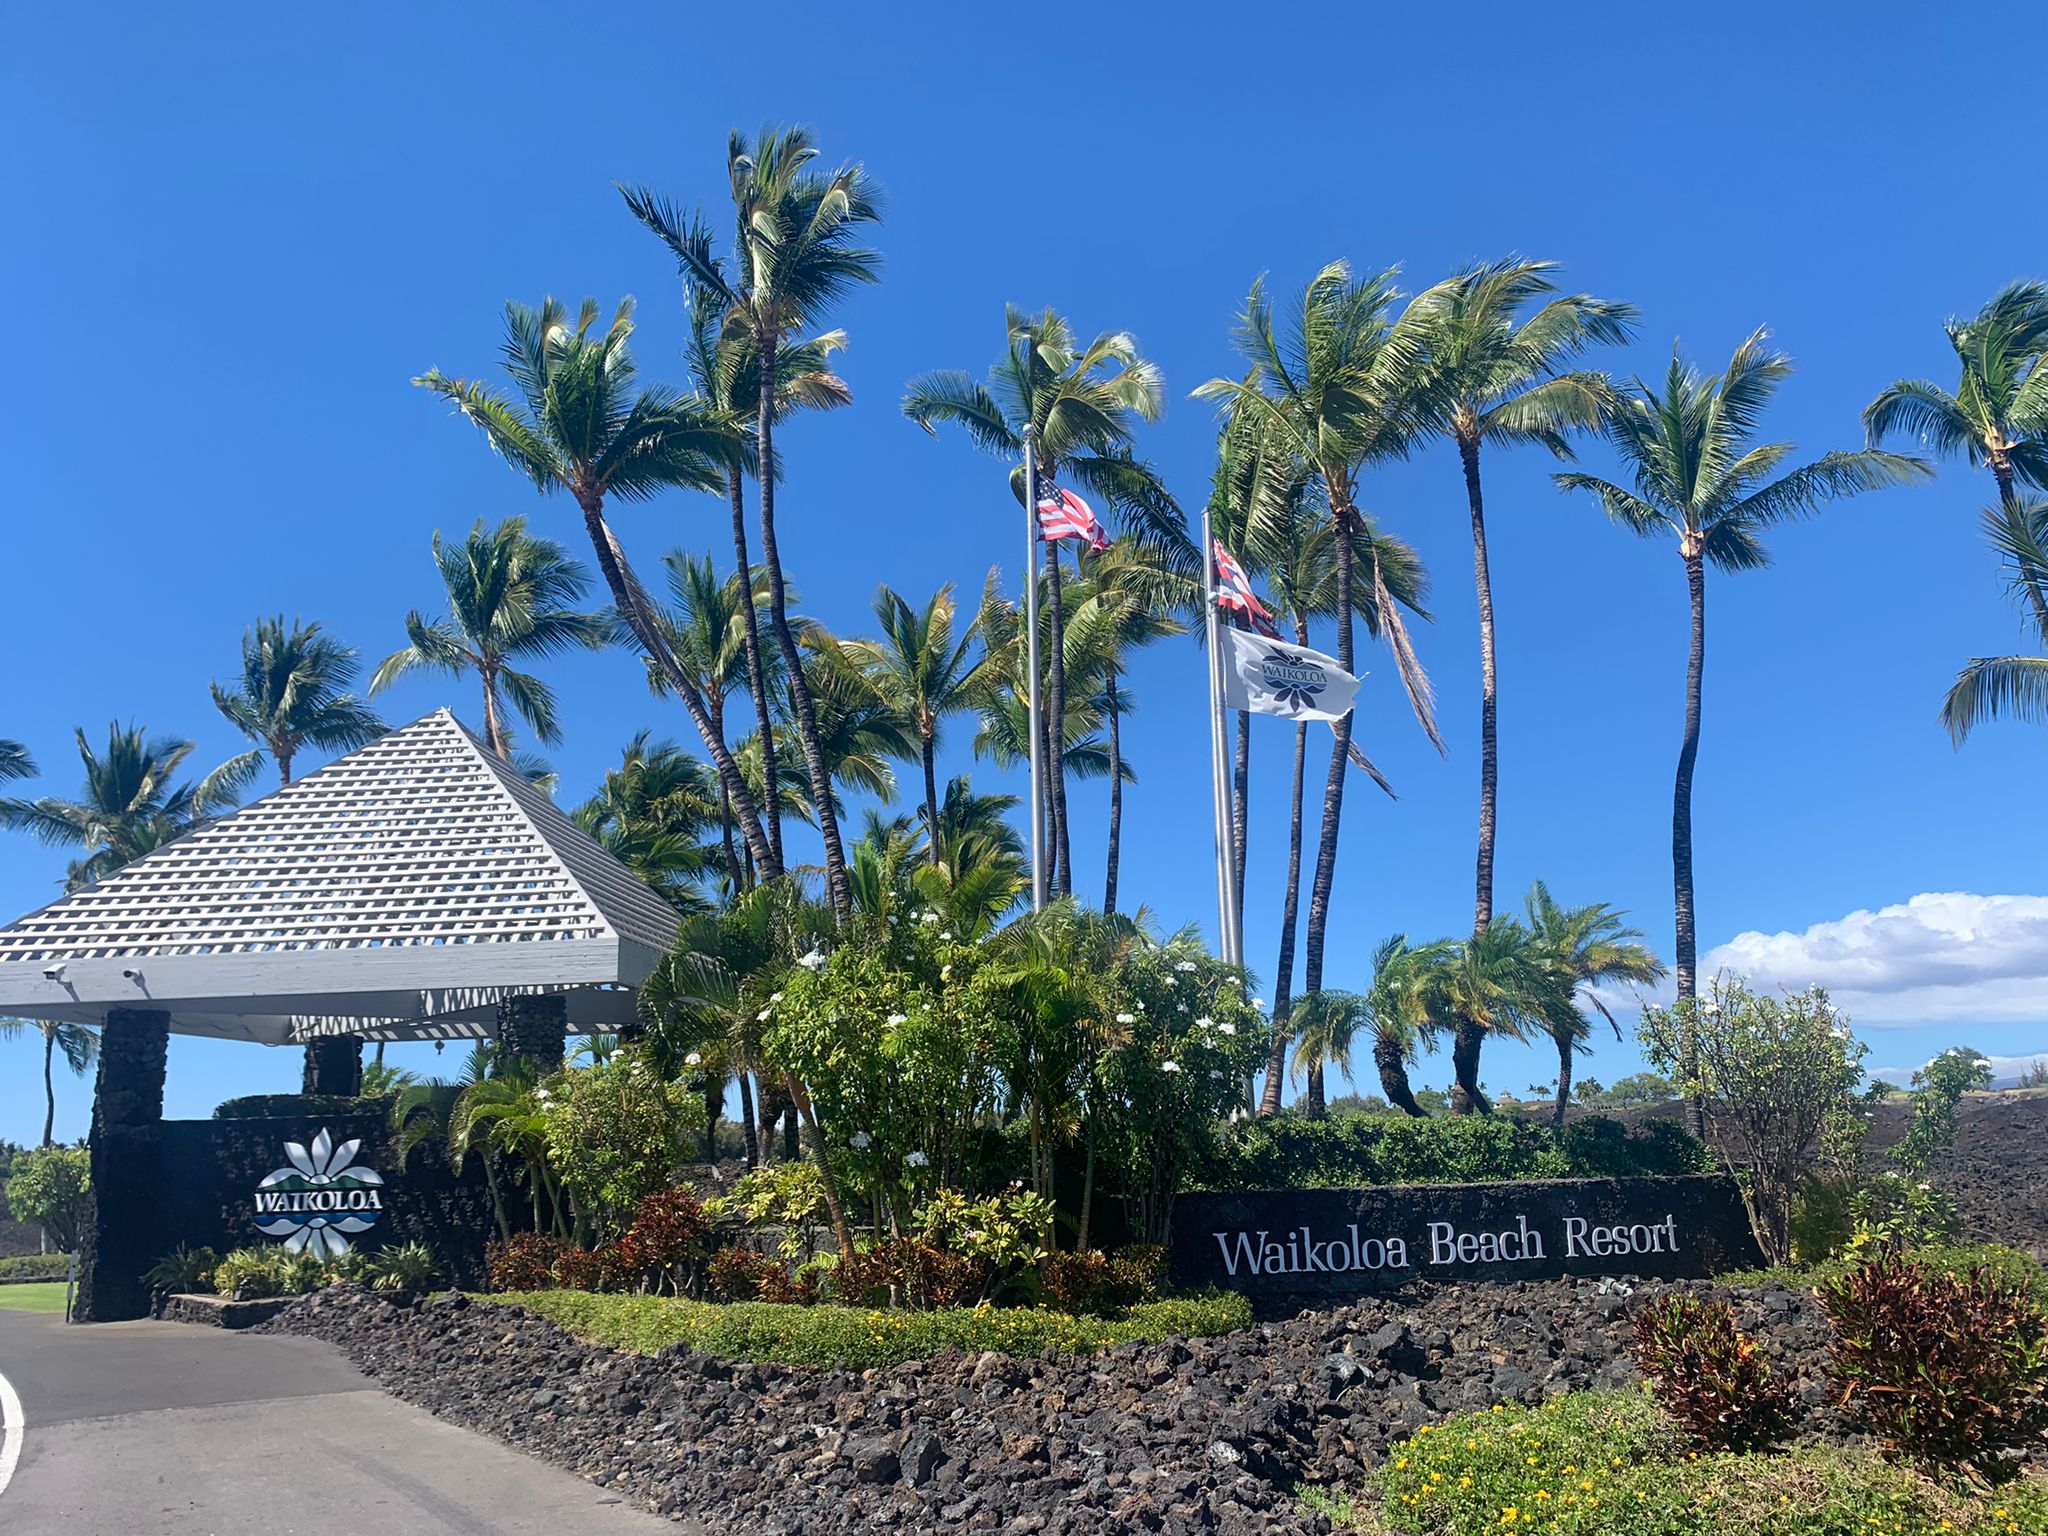 Photo of entrance to Waikoloa Beach Resort area